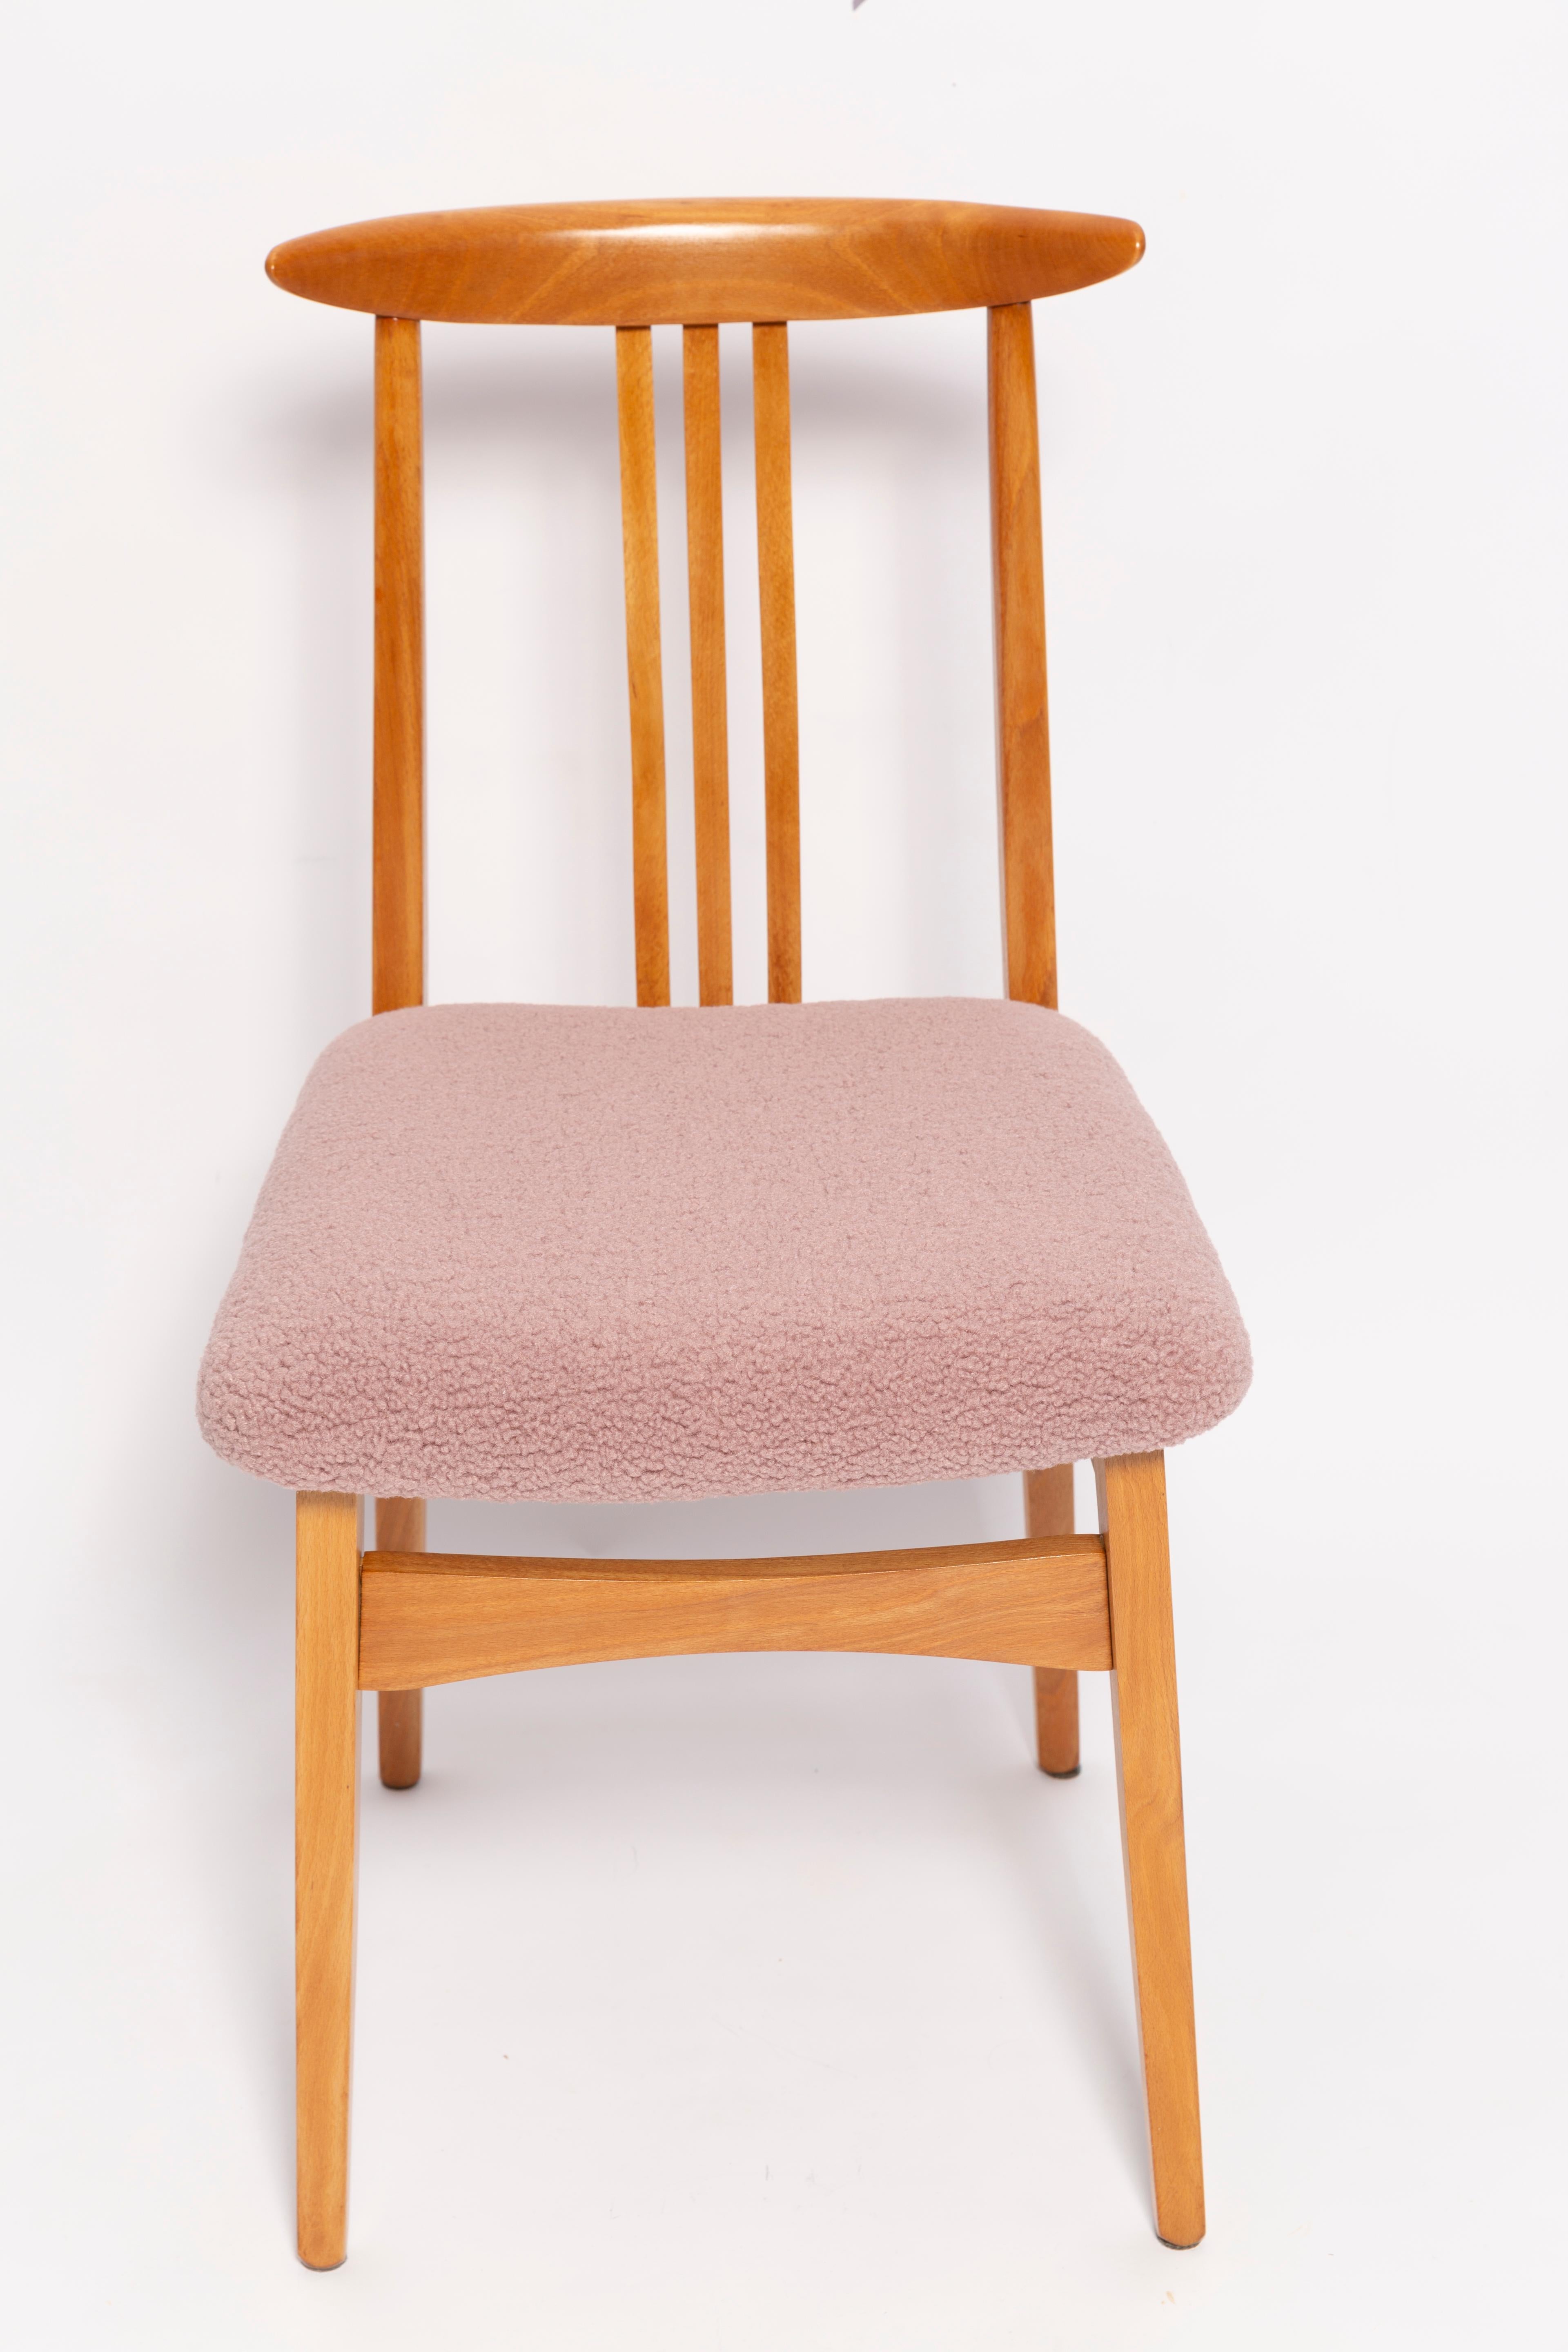 20th Century Ten Mid-Century Pink Blush Boucle Chairs, Light Wood, M. Zielinski, Europe 1960s For Sale